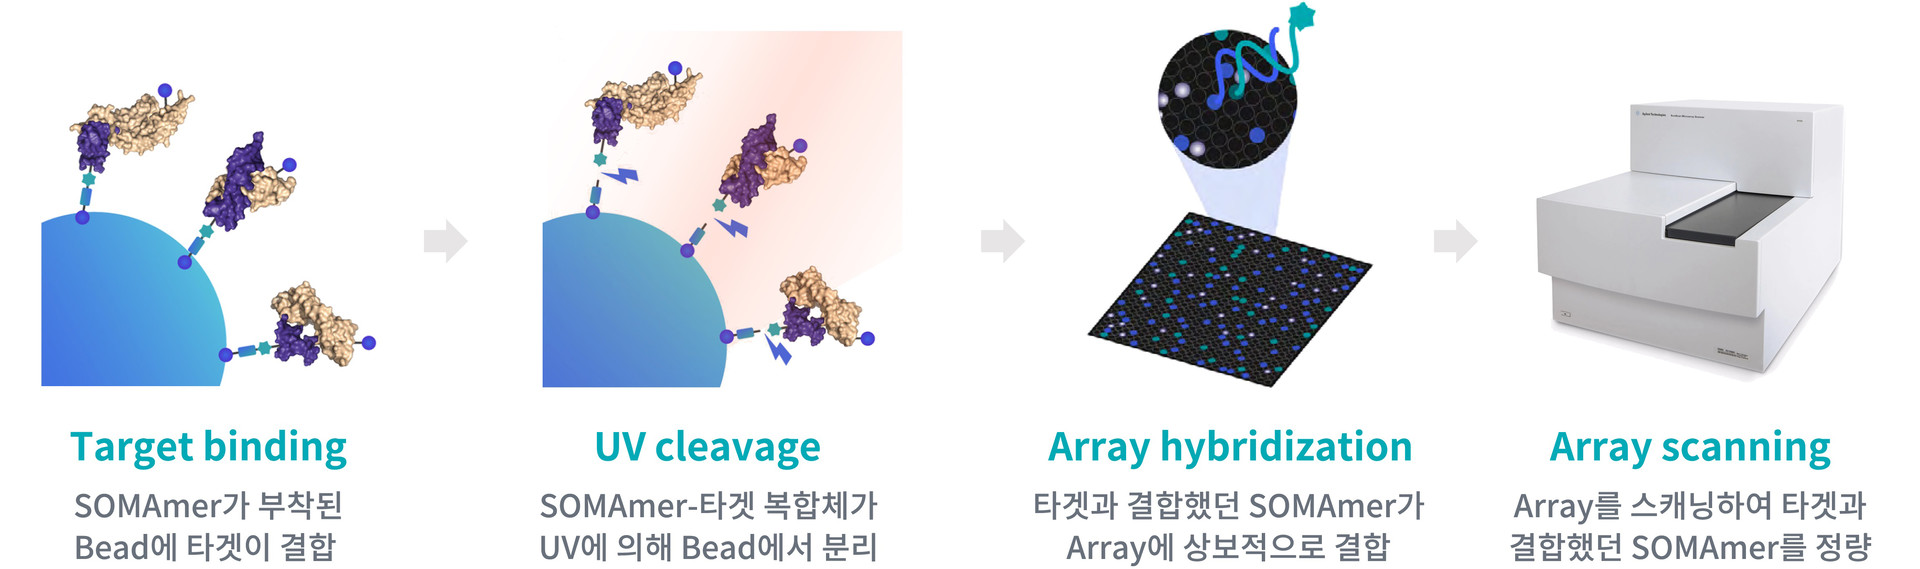 Target binding UV cleavage Array hybridization Array scanning